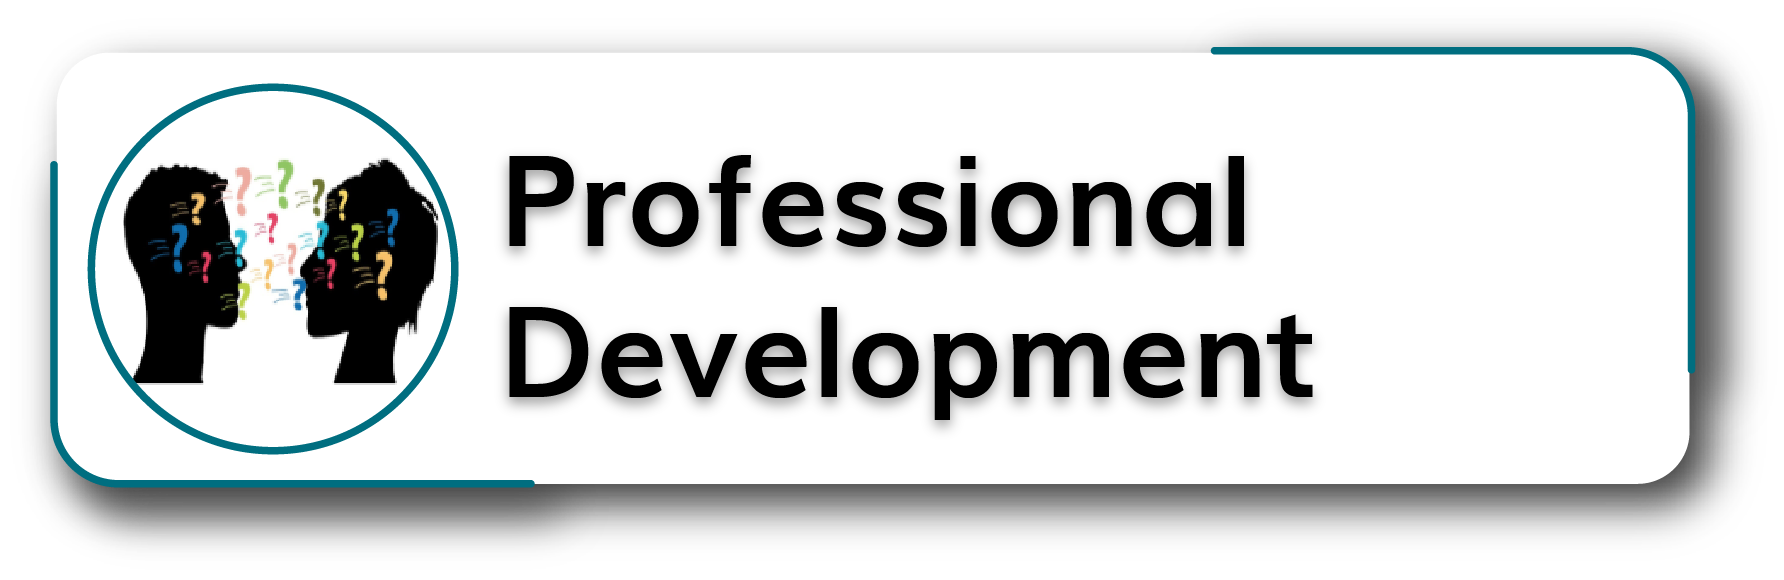 Professional Development Button